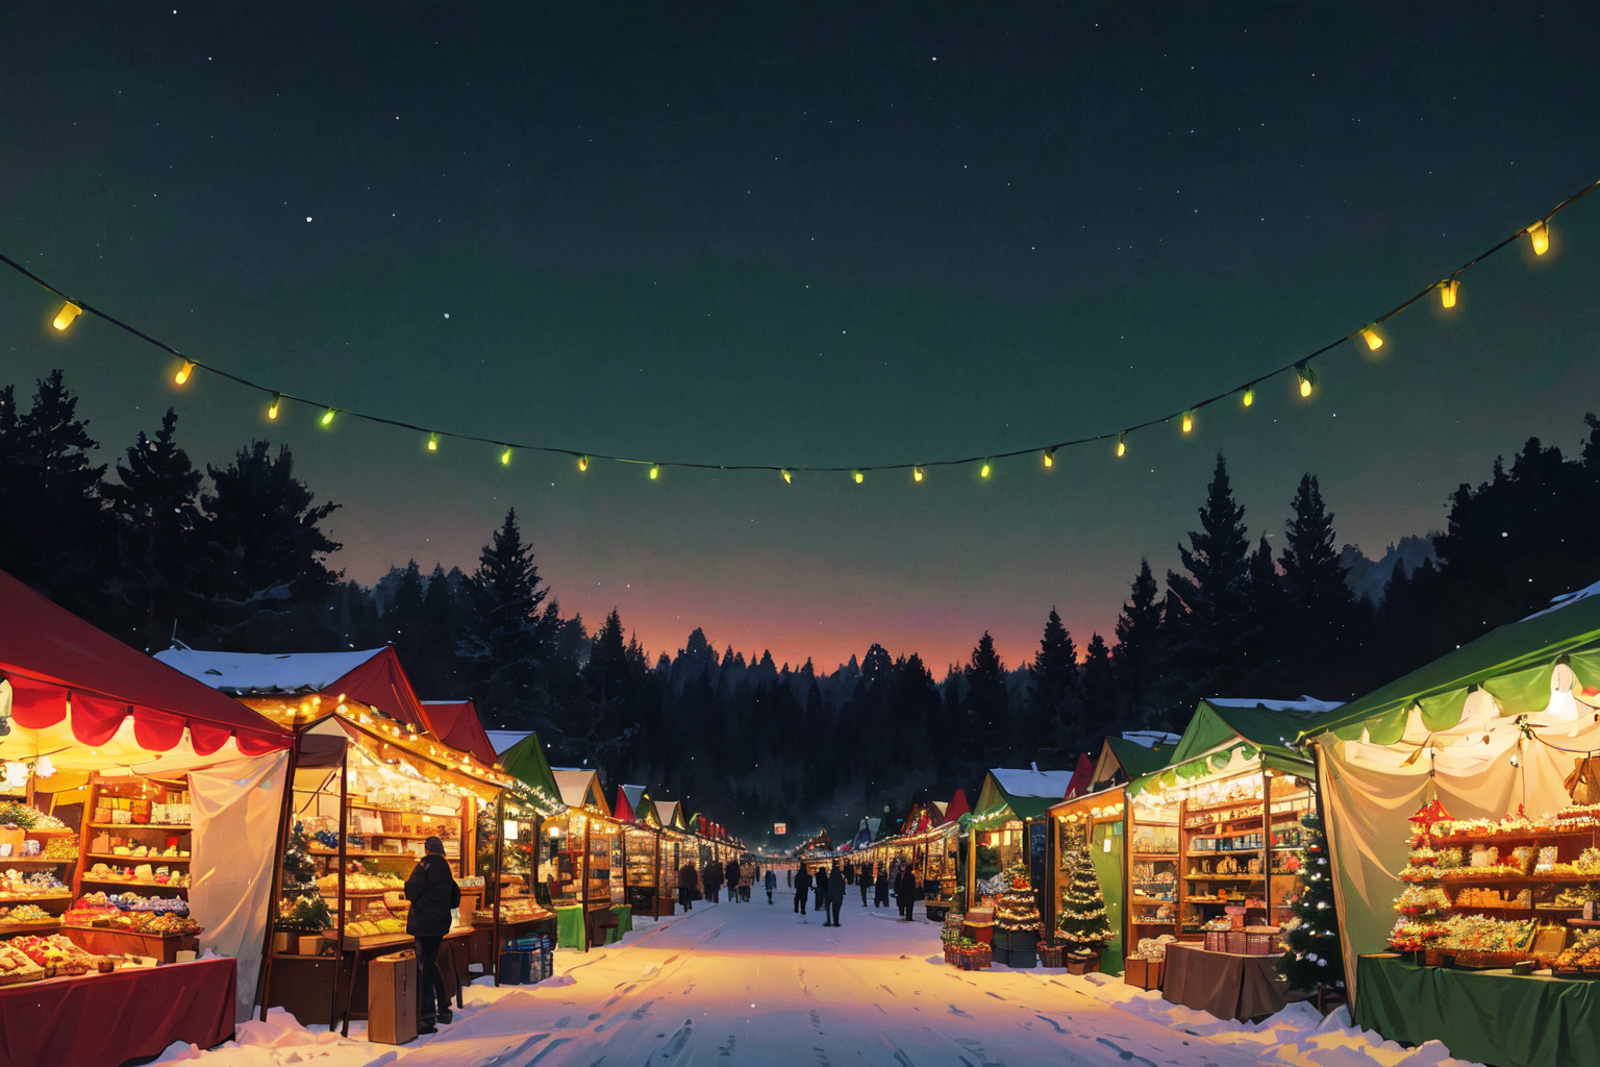 Winter Market image by duskfallcrew